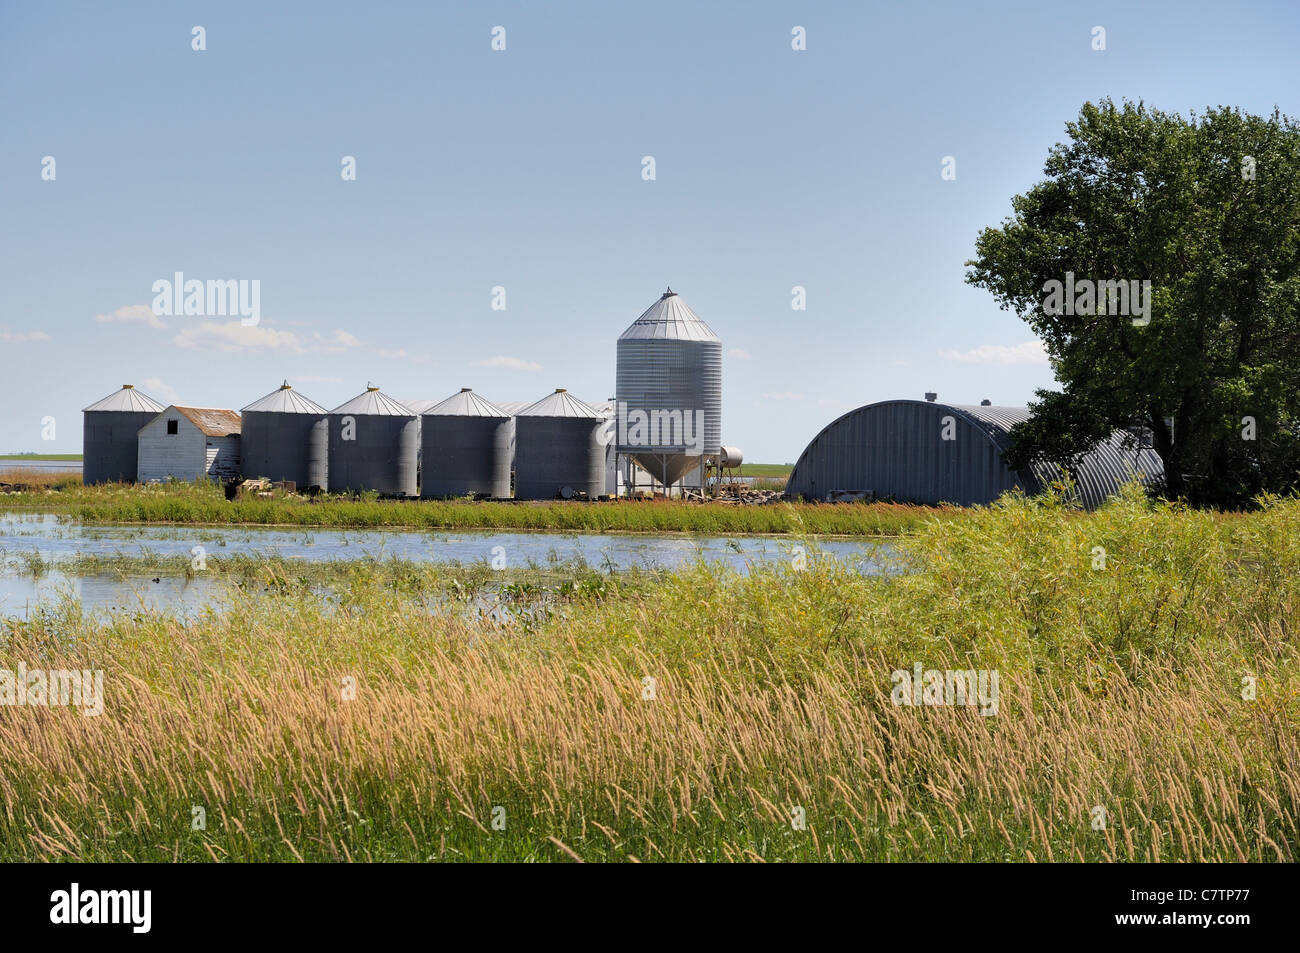 A prairie landscape shot showing grain storage bins and recent flooding to farmland in Saskatchewan, Canada. Stock Photo